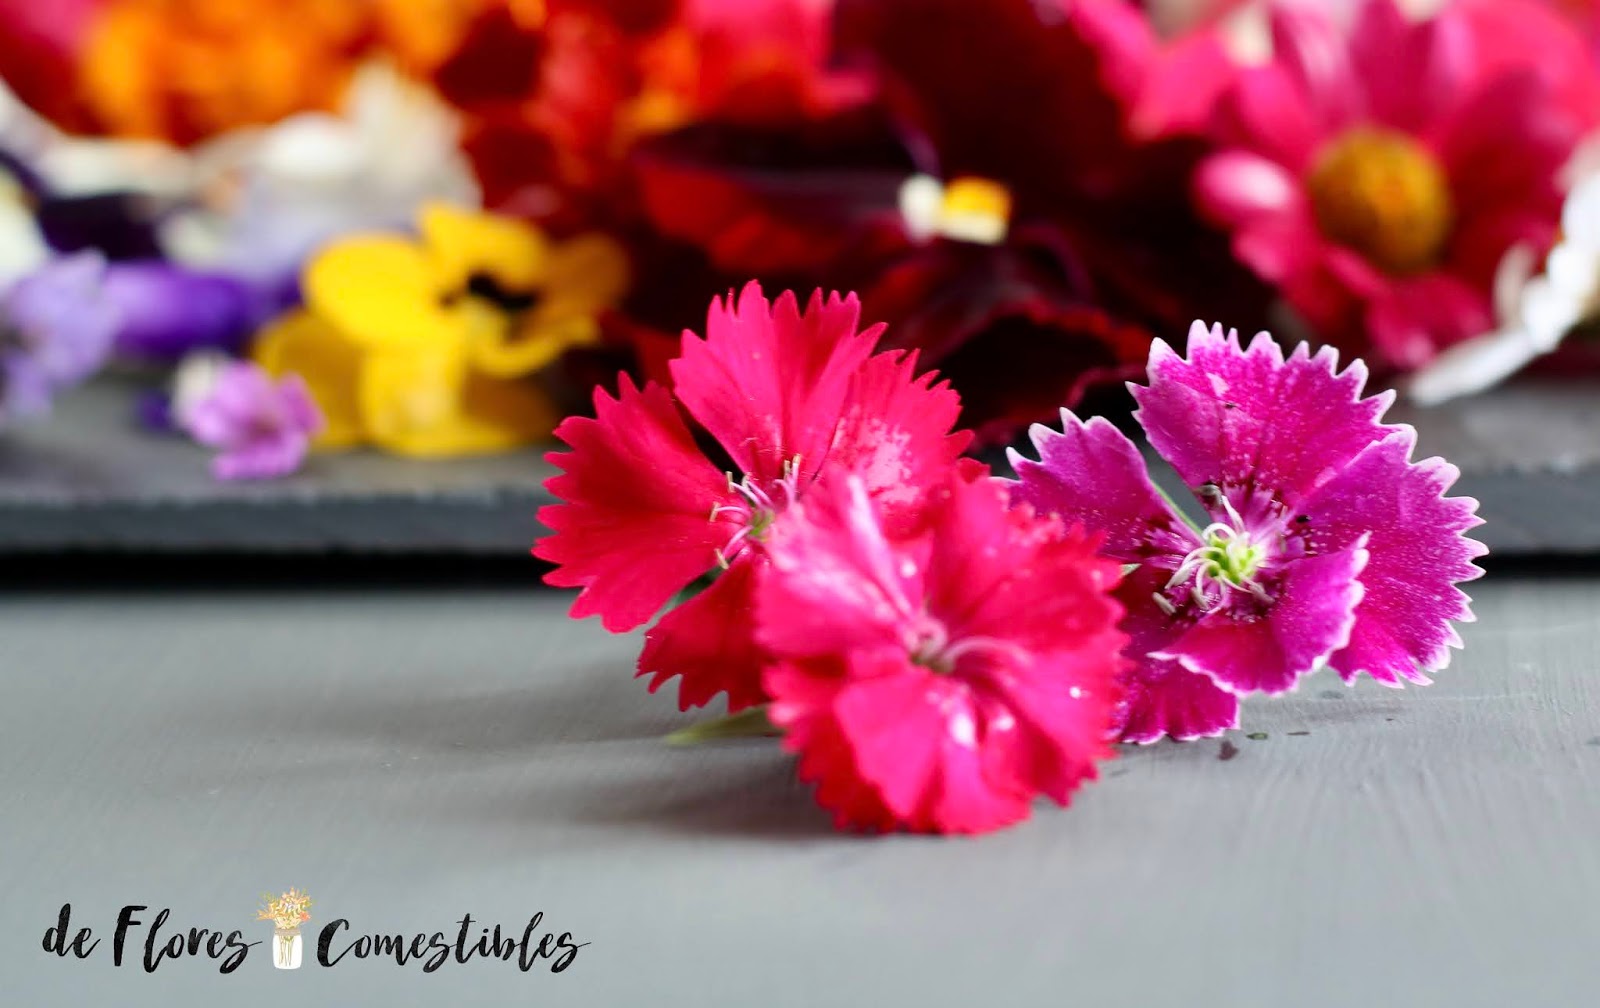 Flor de clavel chino | De flores comestibles